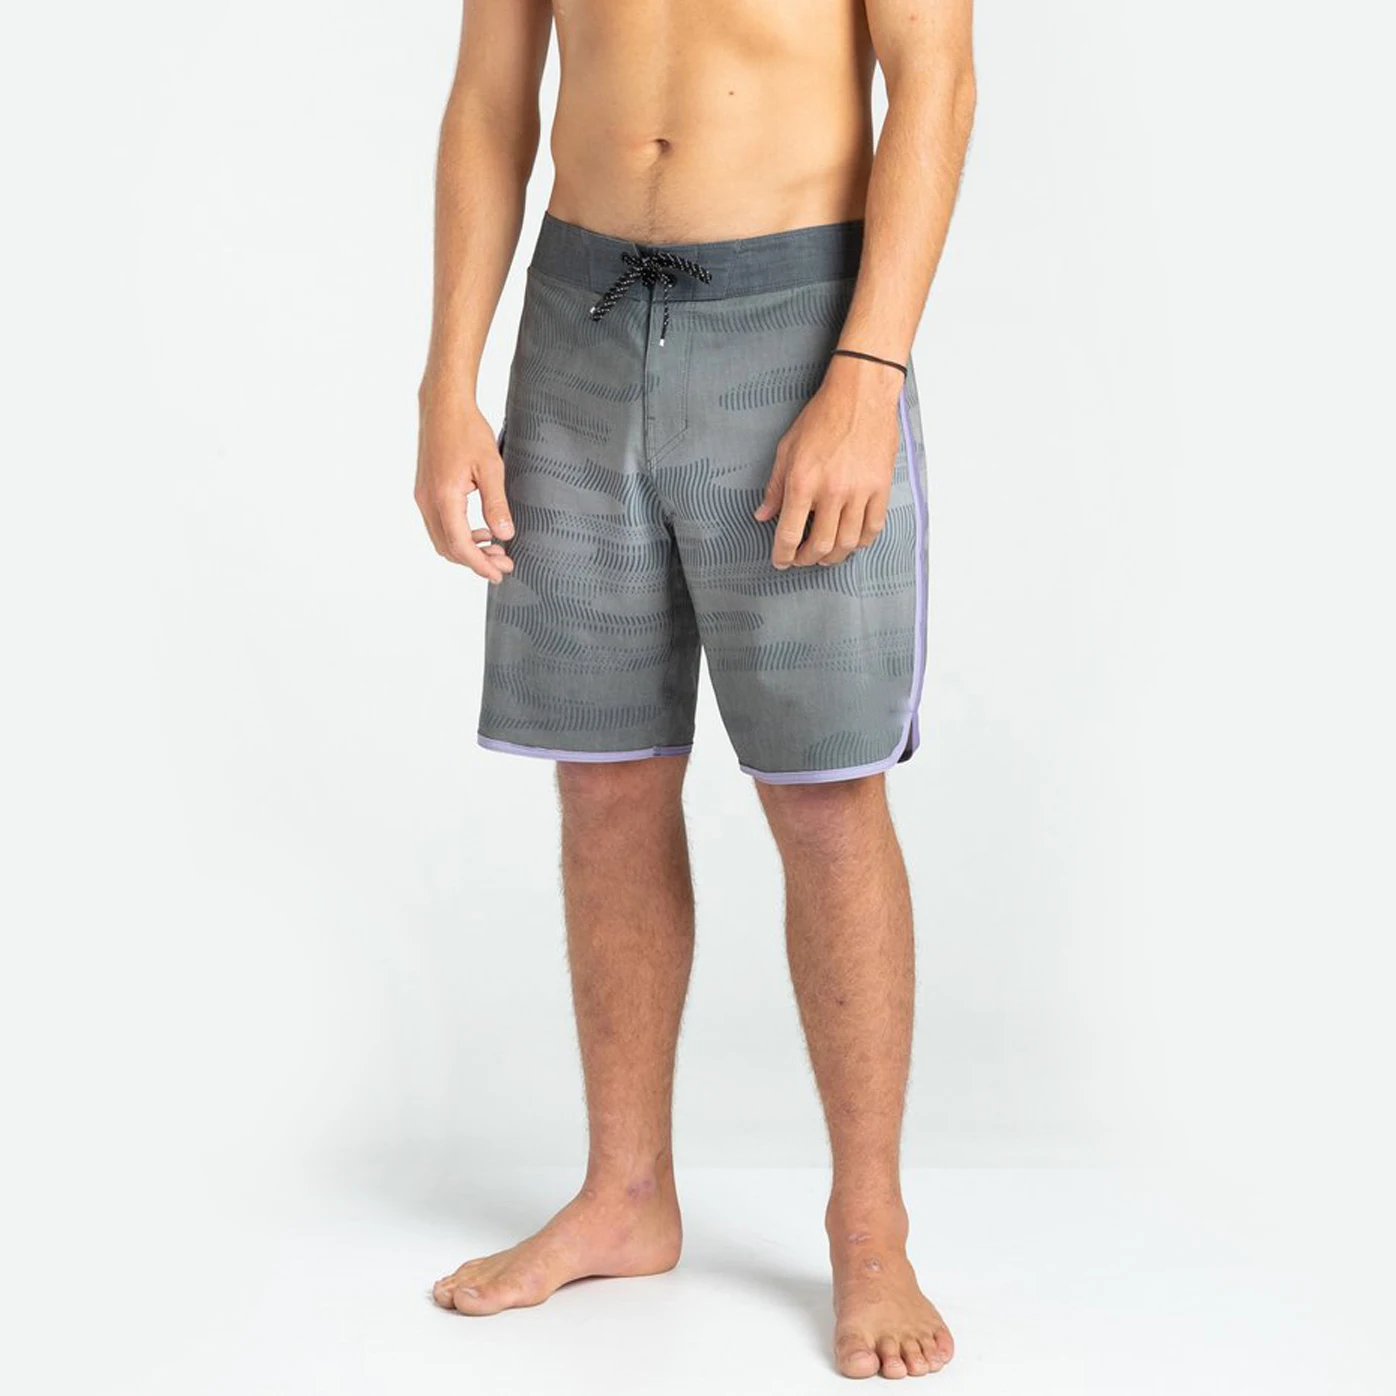 Monwe Jiu Jitsu Mens Summer Casual Shorts,Beach Shorts Pocket Shorts